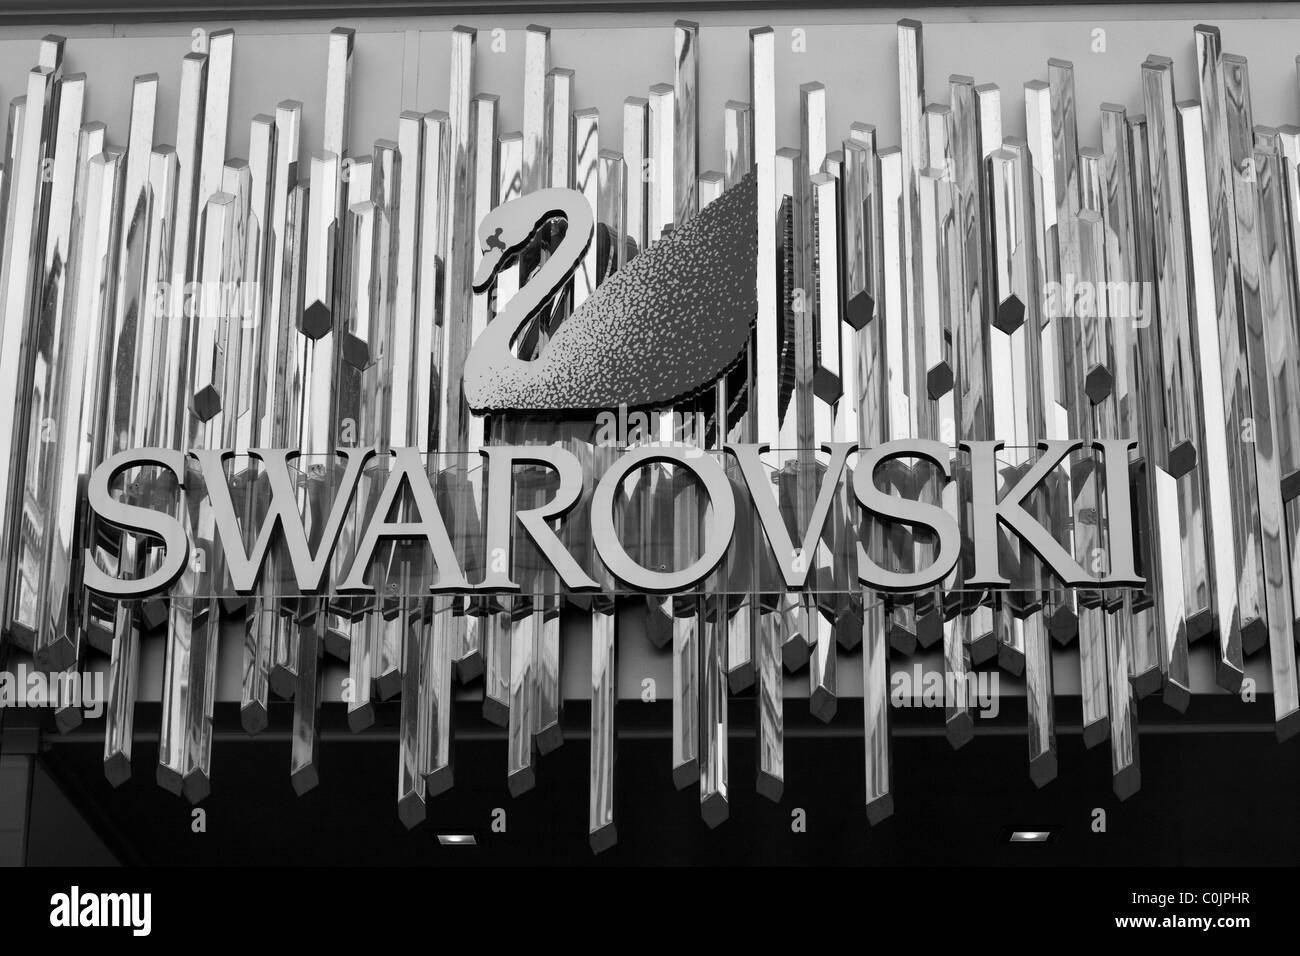 Swarovski Uk High Resolution Stock Photography and Images - Alamy